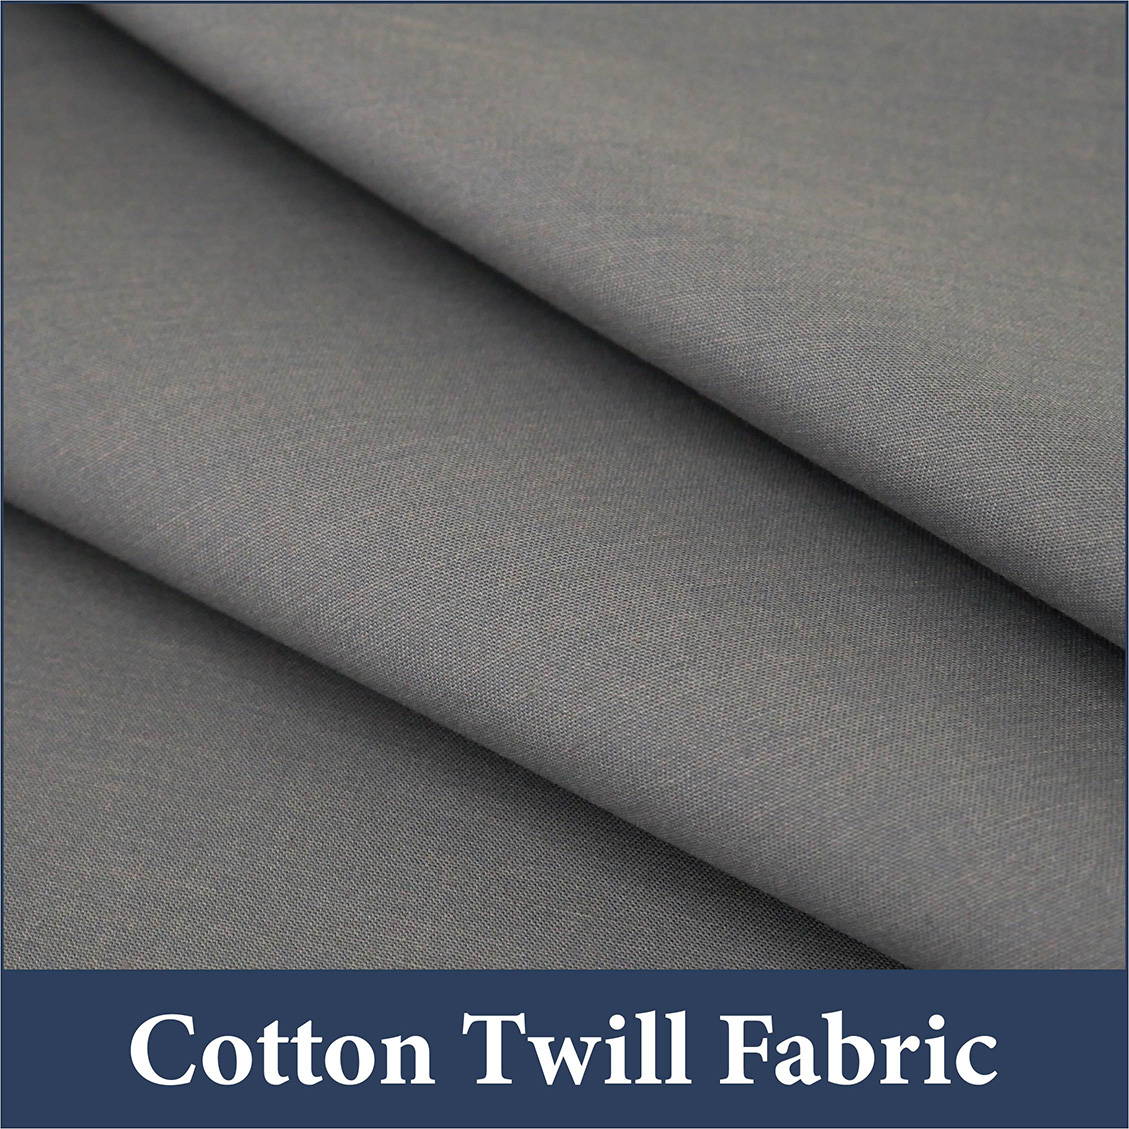 Cotton twill fabric swatch